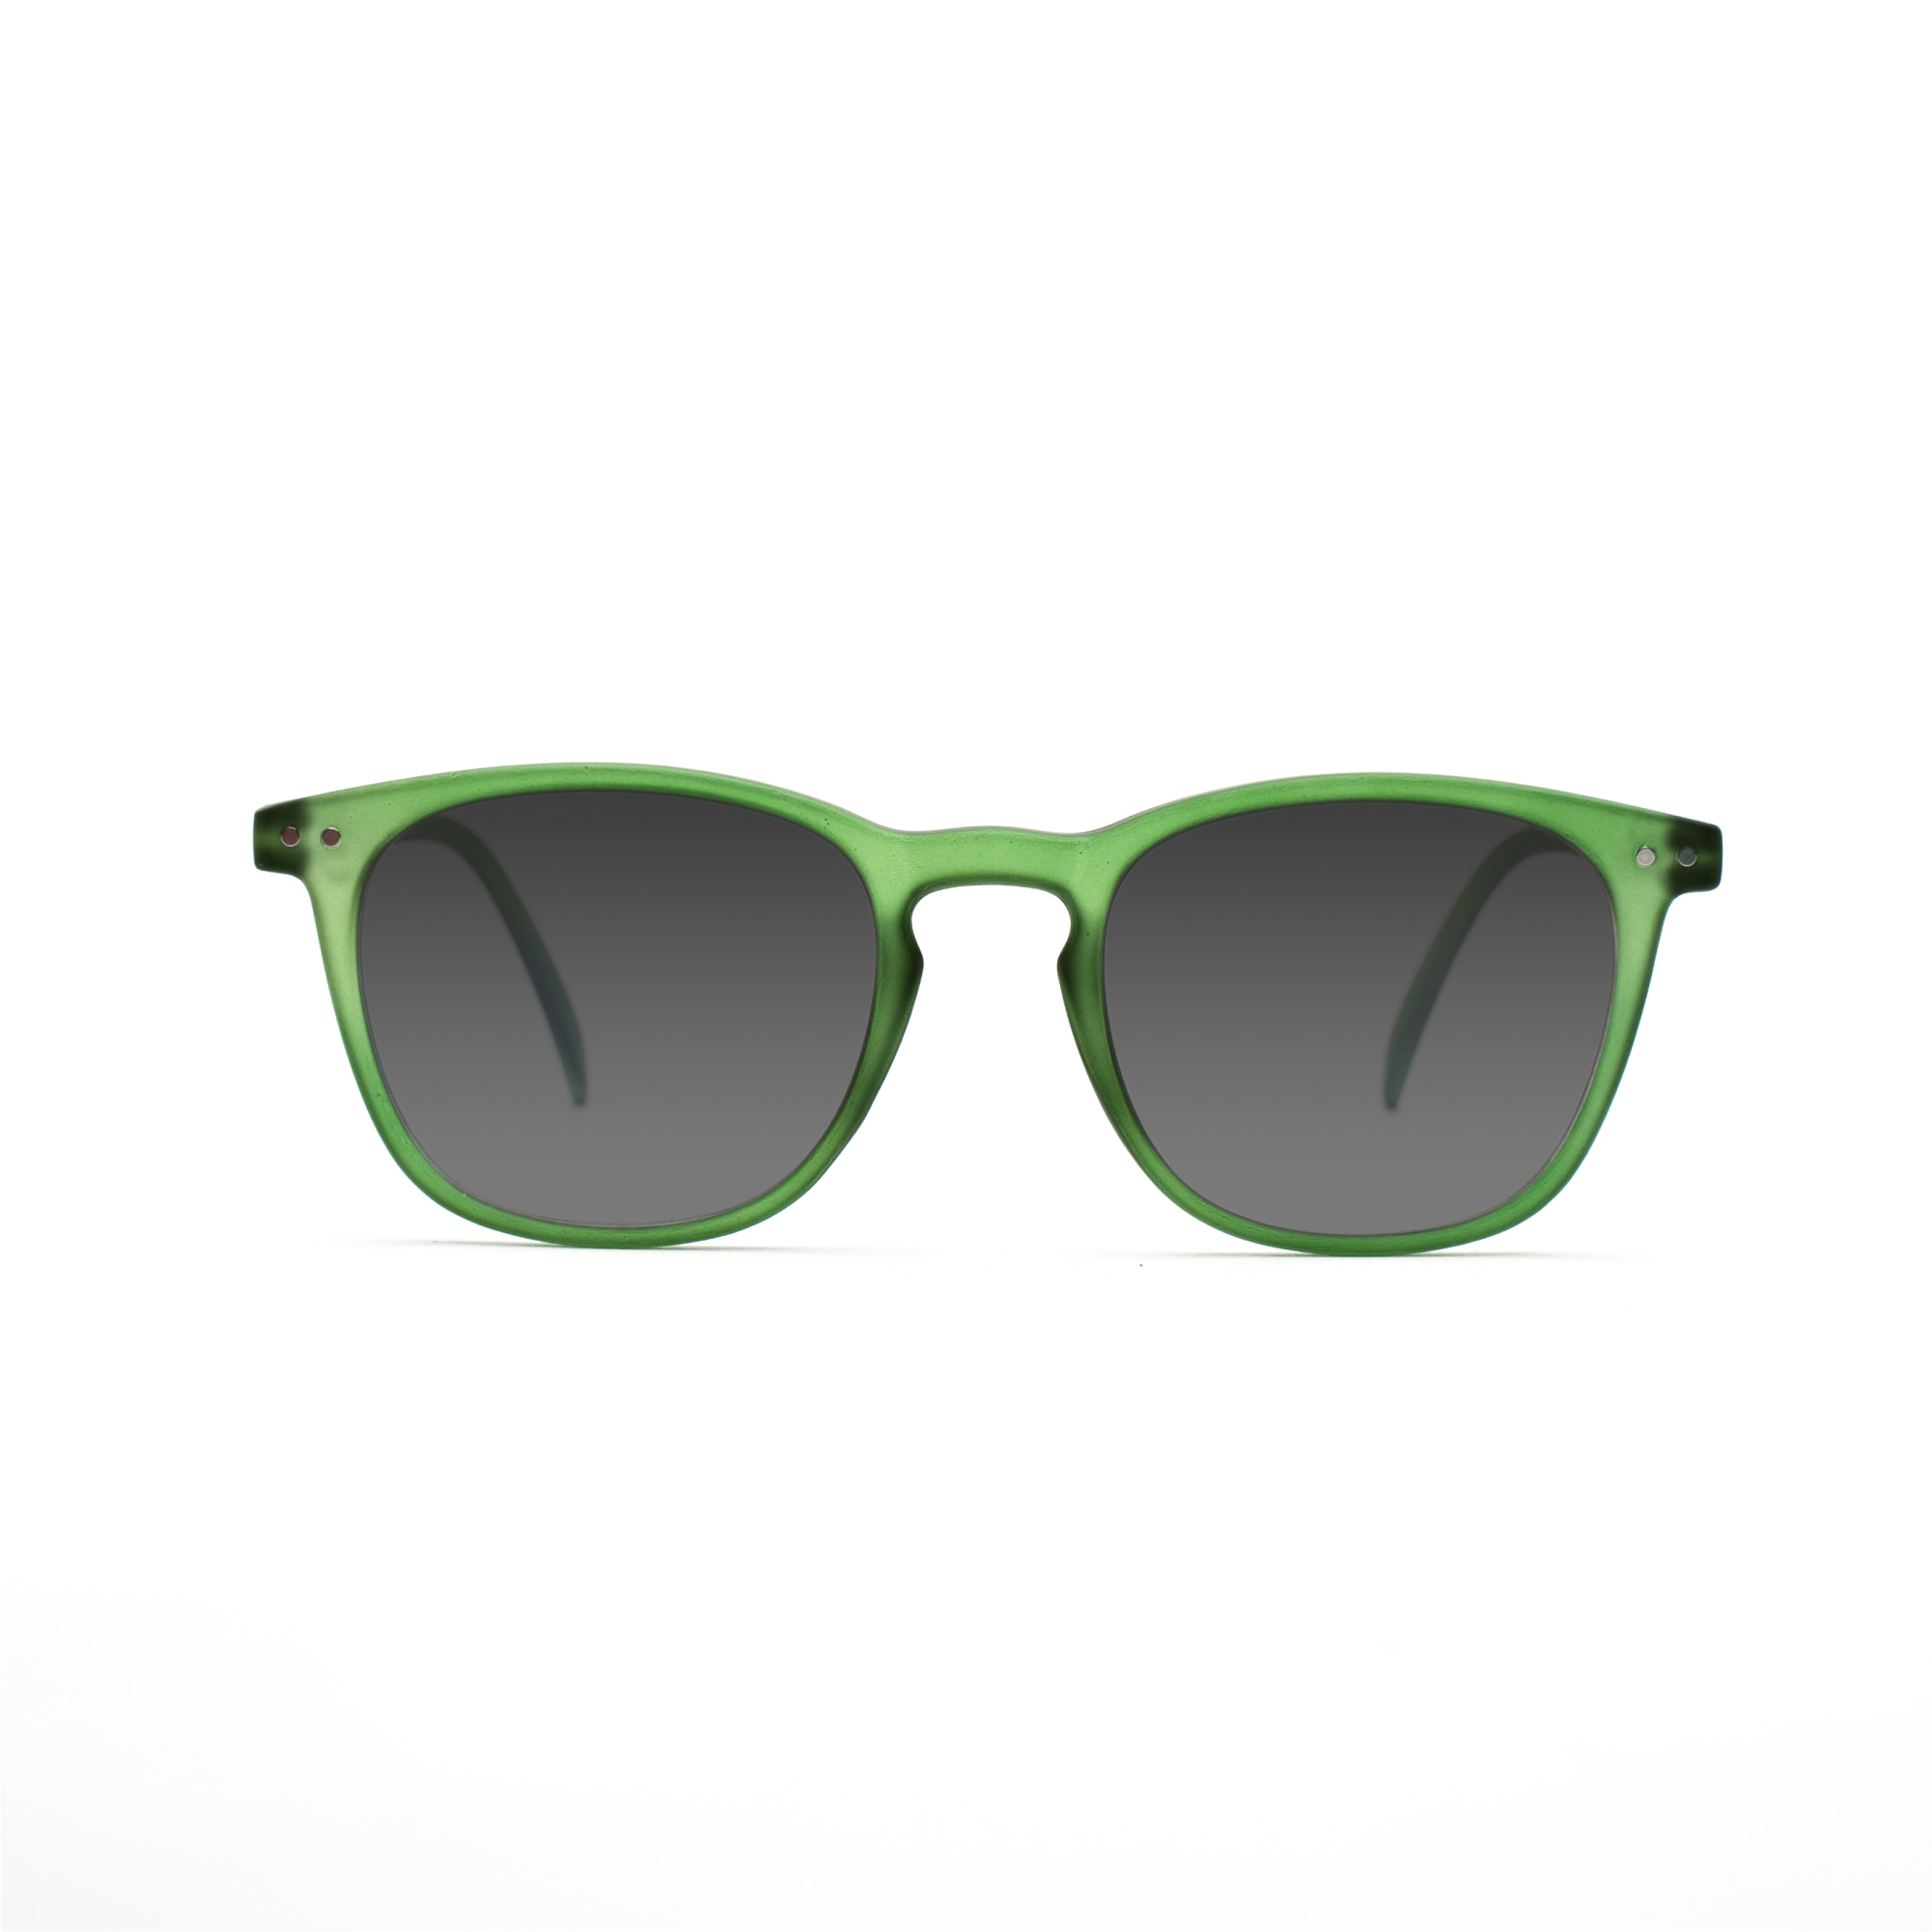 men's transition glasses – William Gen 8 m - Green